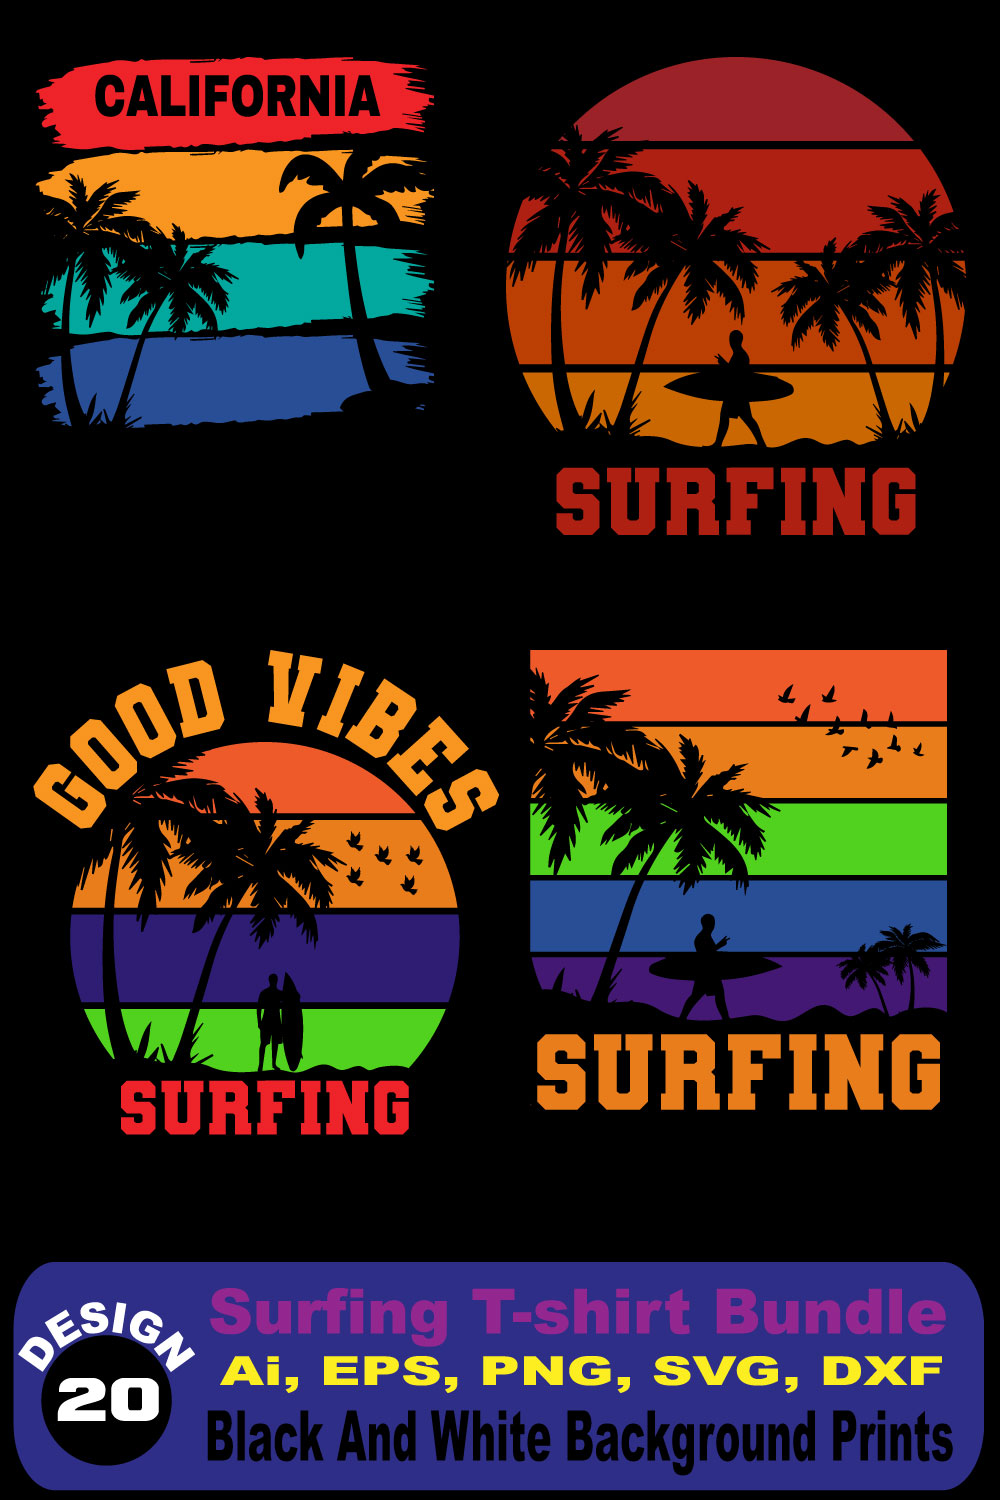 California Surfing T-shirt Design bundle pinterest preview image.